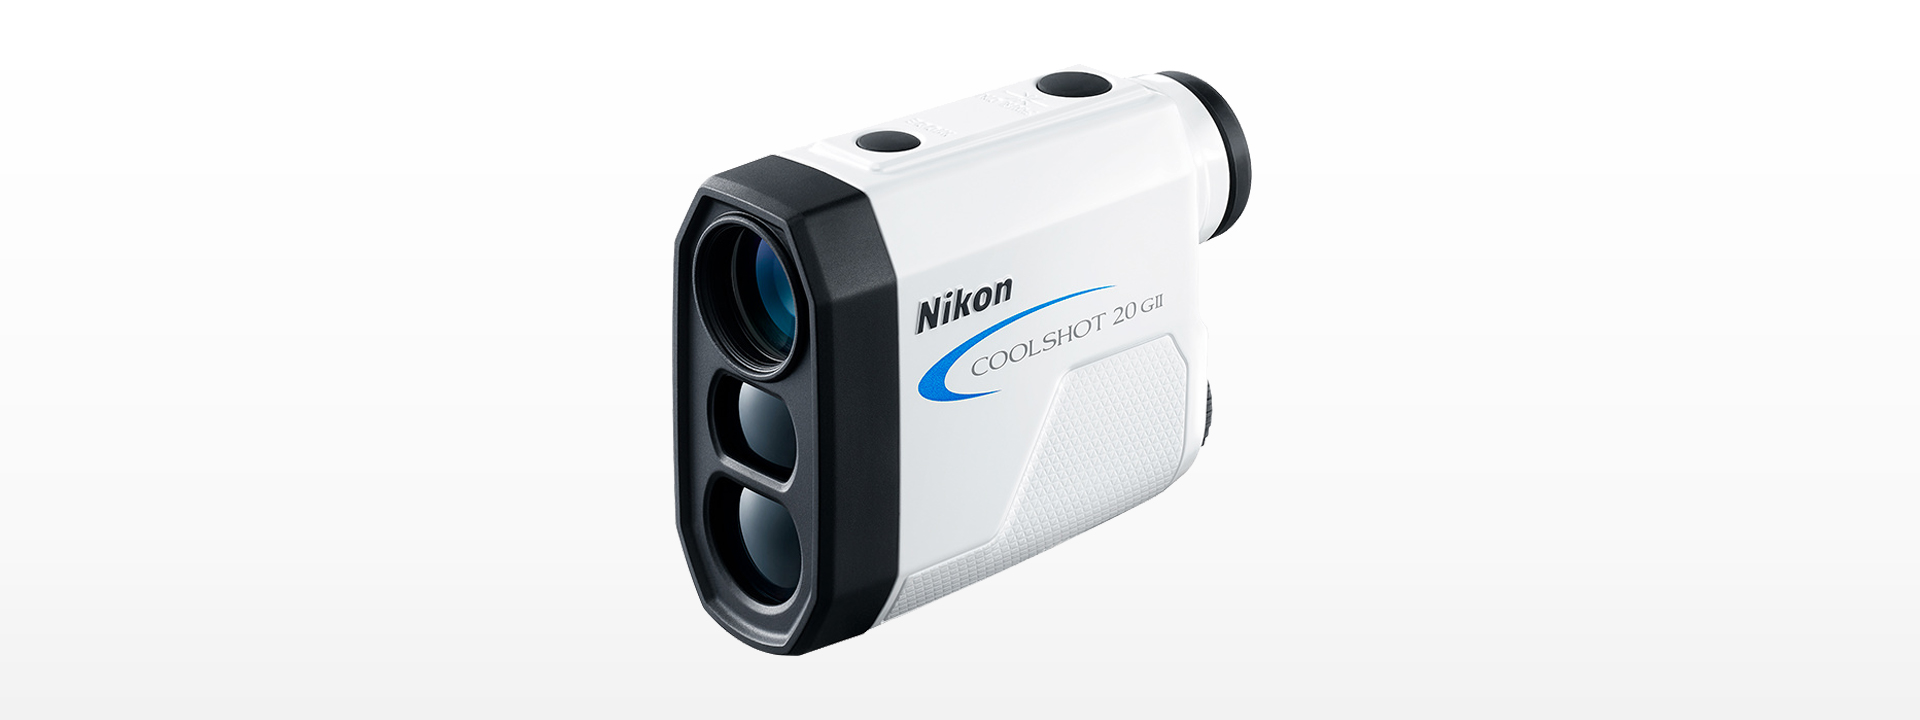 Nikon クールショット COOLSHOT 20iGII 高低差対応 新品-